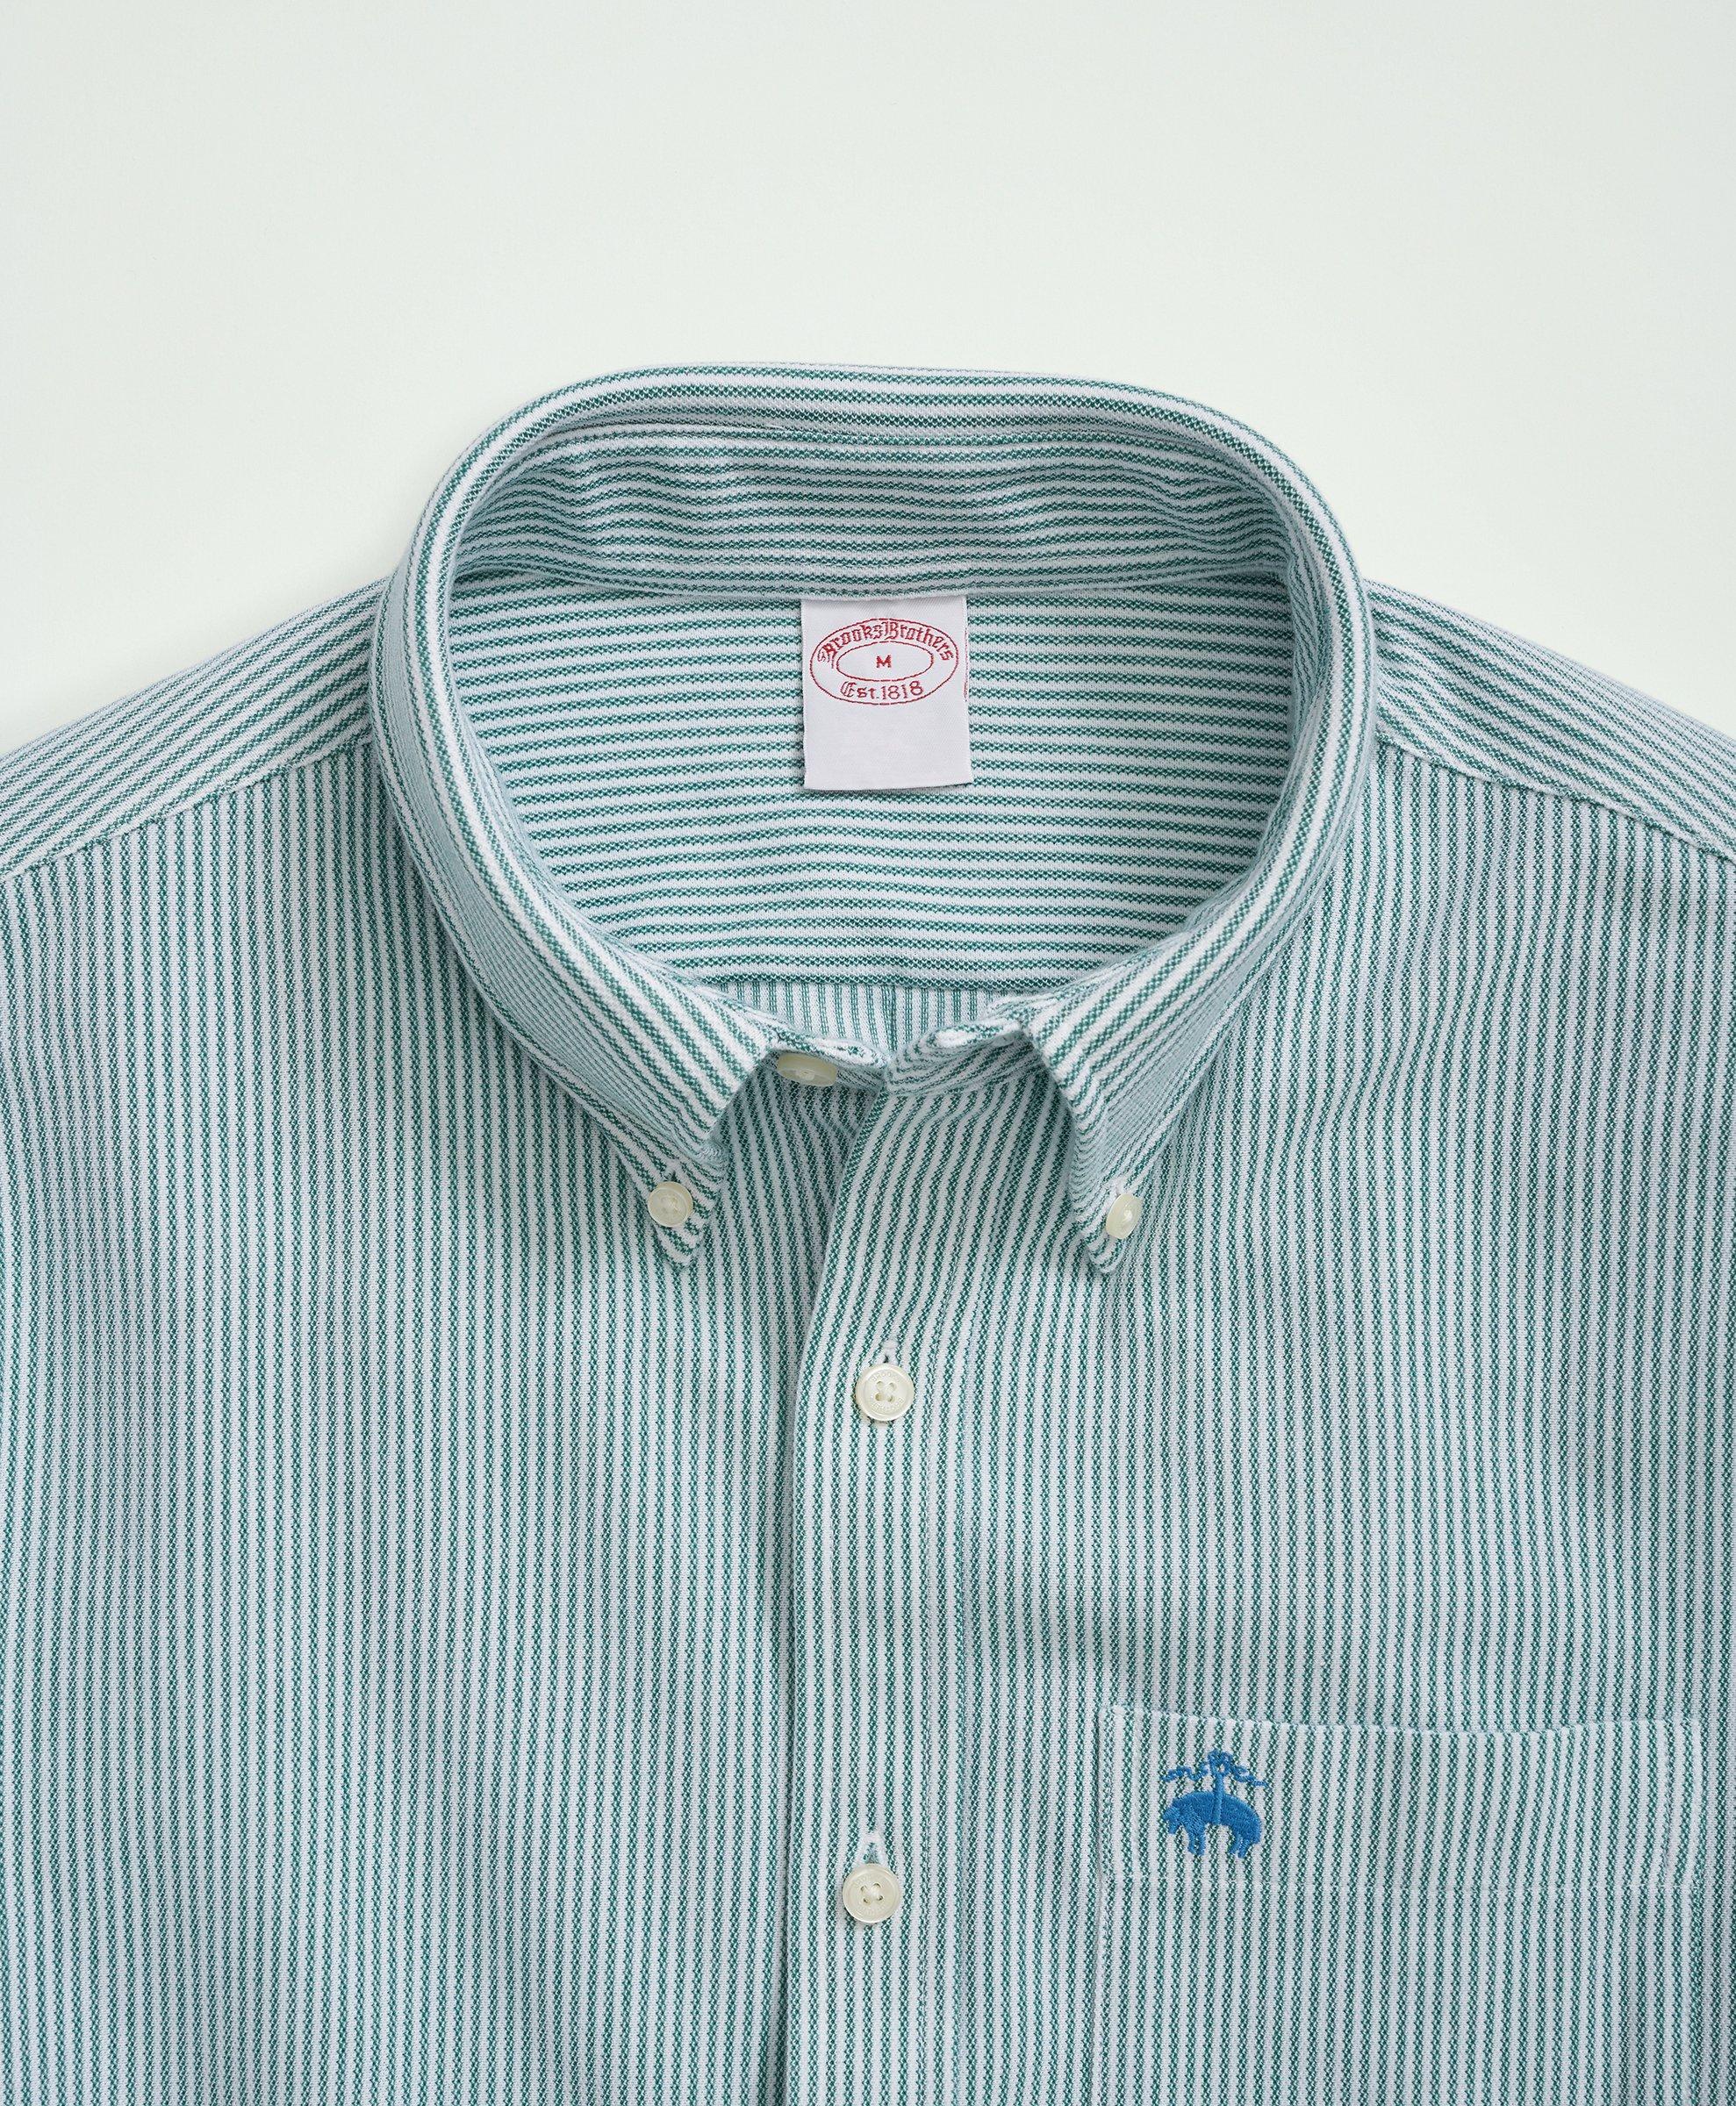 Original Fit Cotton Pique Knit Candy Stripe Short-Sleeve Shirt, image 2